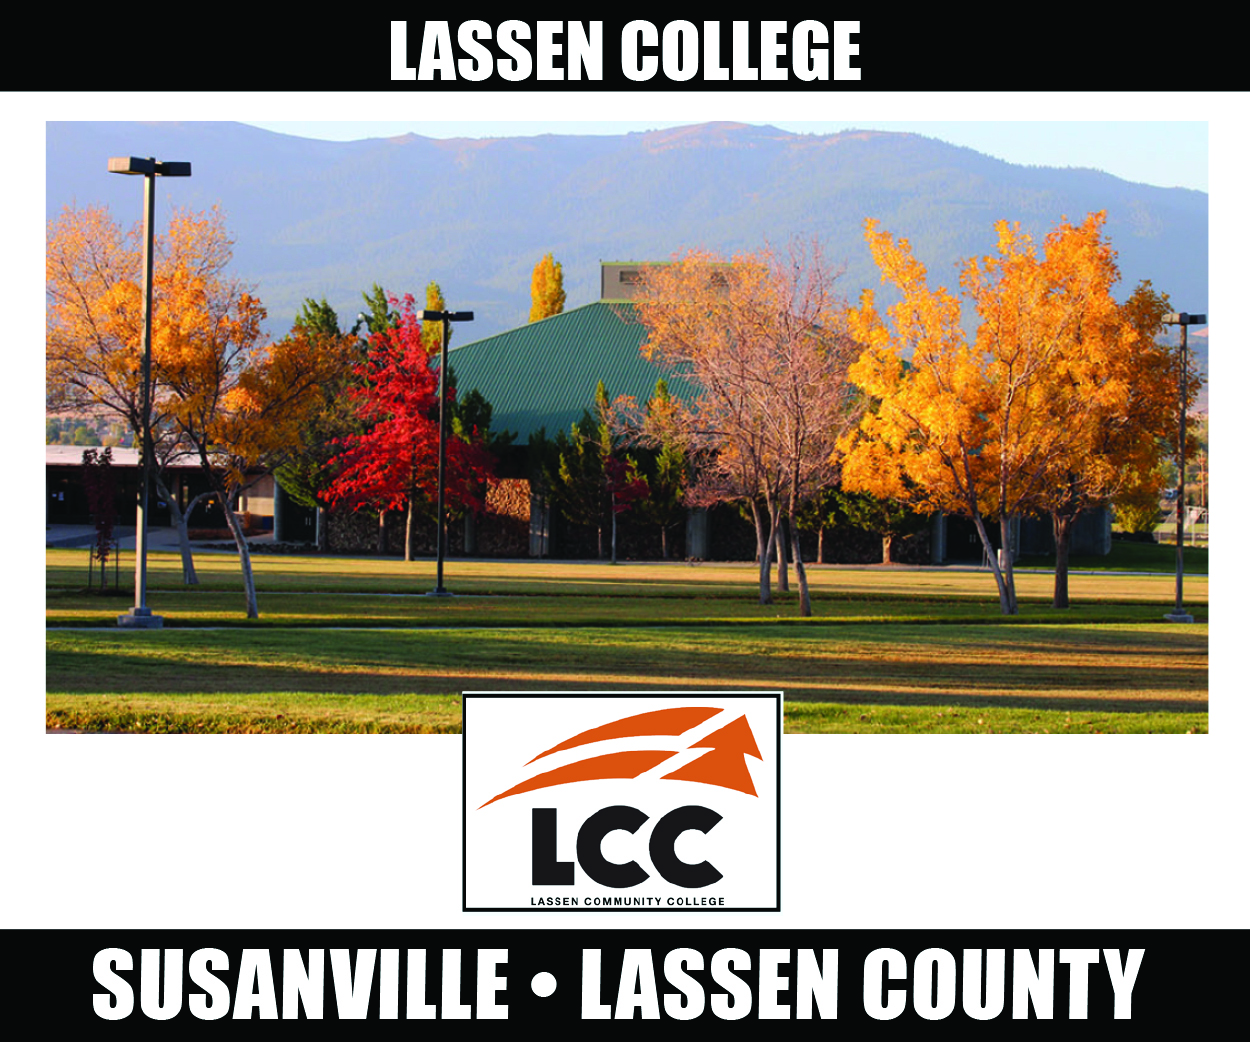 Lassen Community College, nursing, firefighter, truck driving school